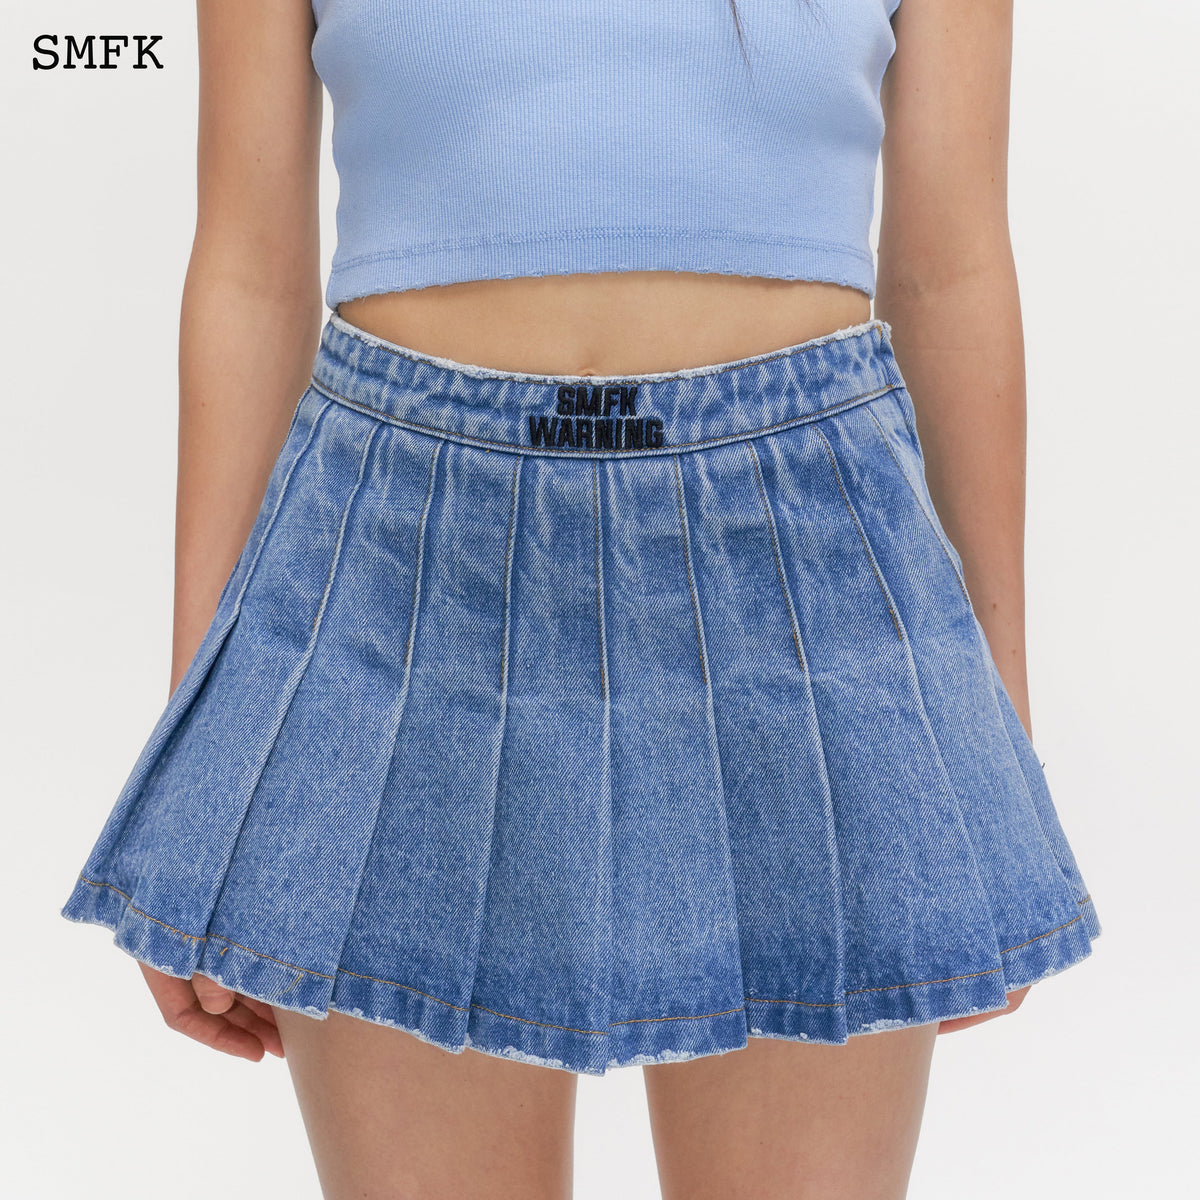 Wilderness Wandering Blue Pleated Short Skirt | SMFK Official